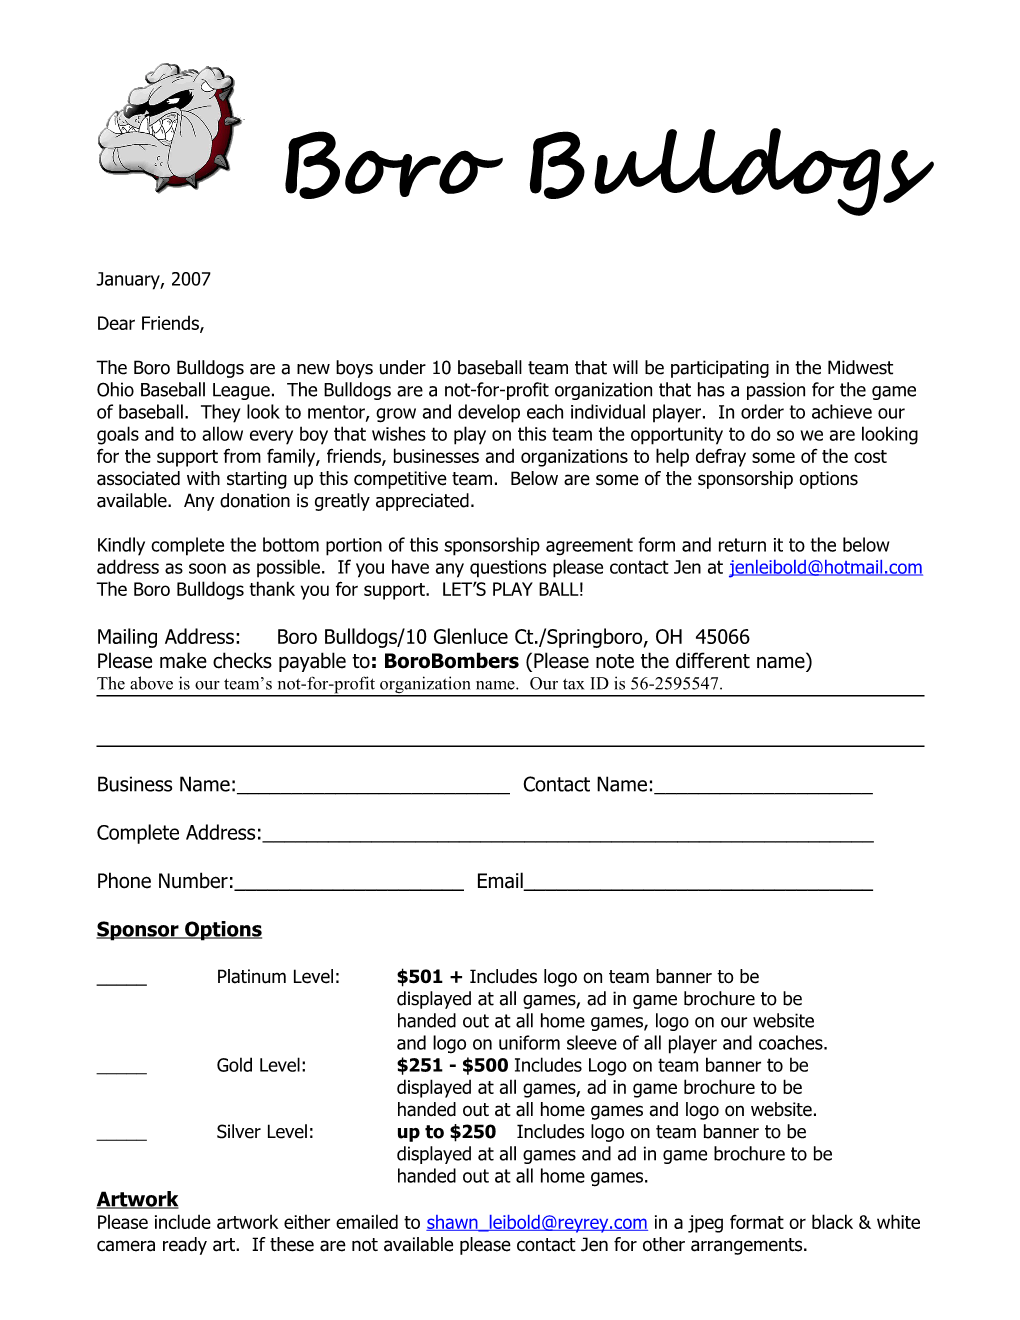 Mailing Address: Boro Bulldogs/10 Glenluce Ct./Springboro, OH 45066